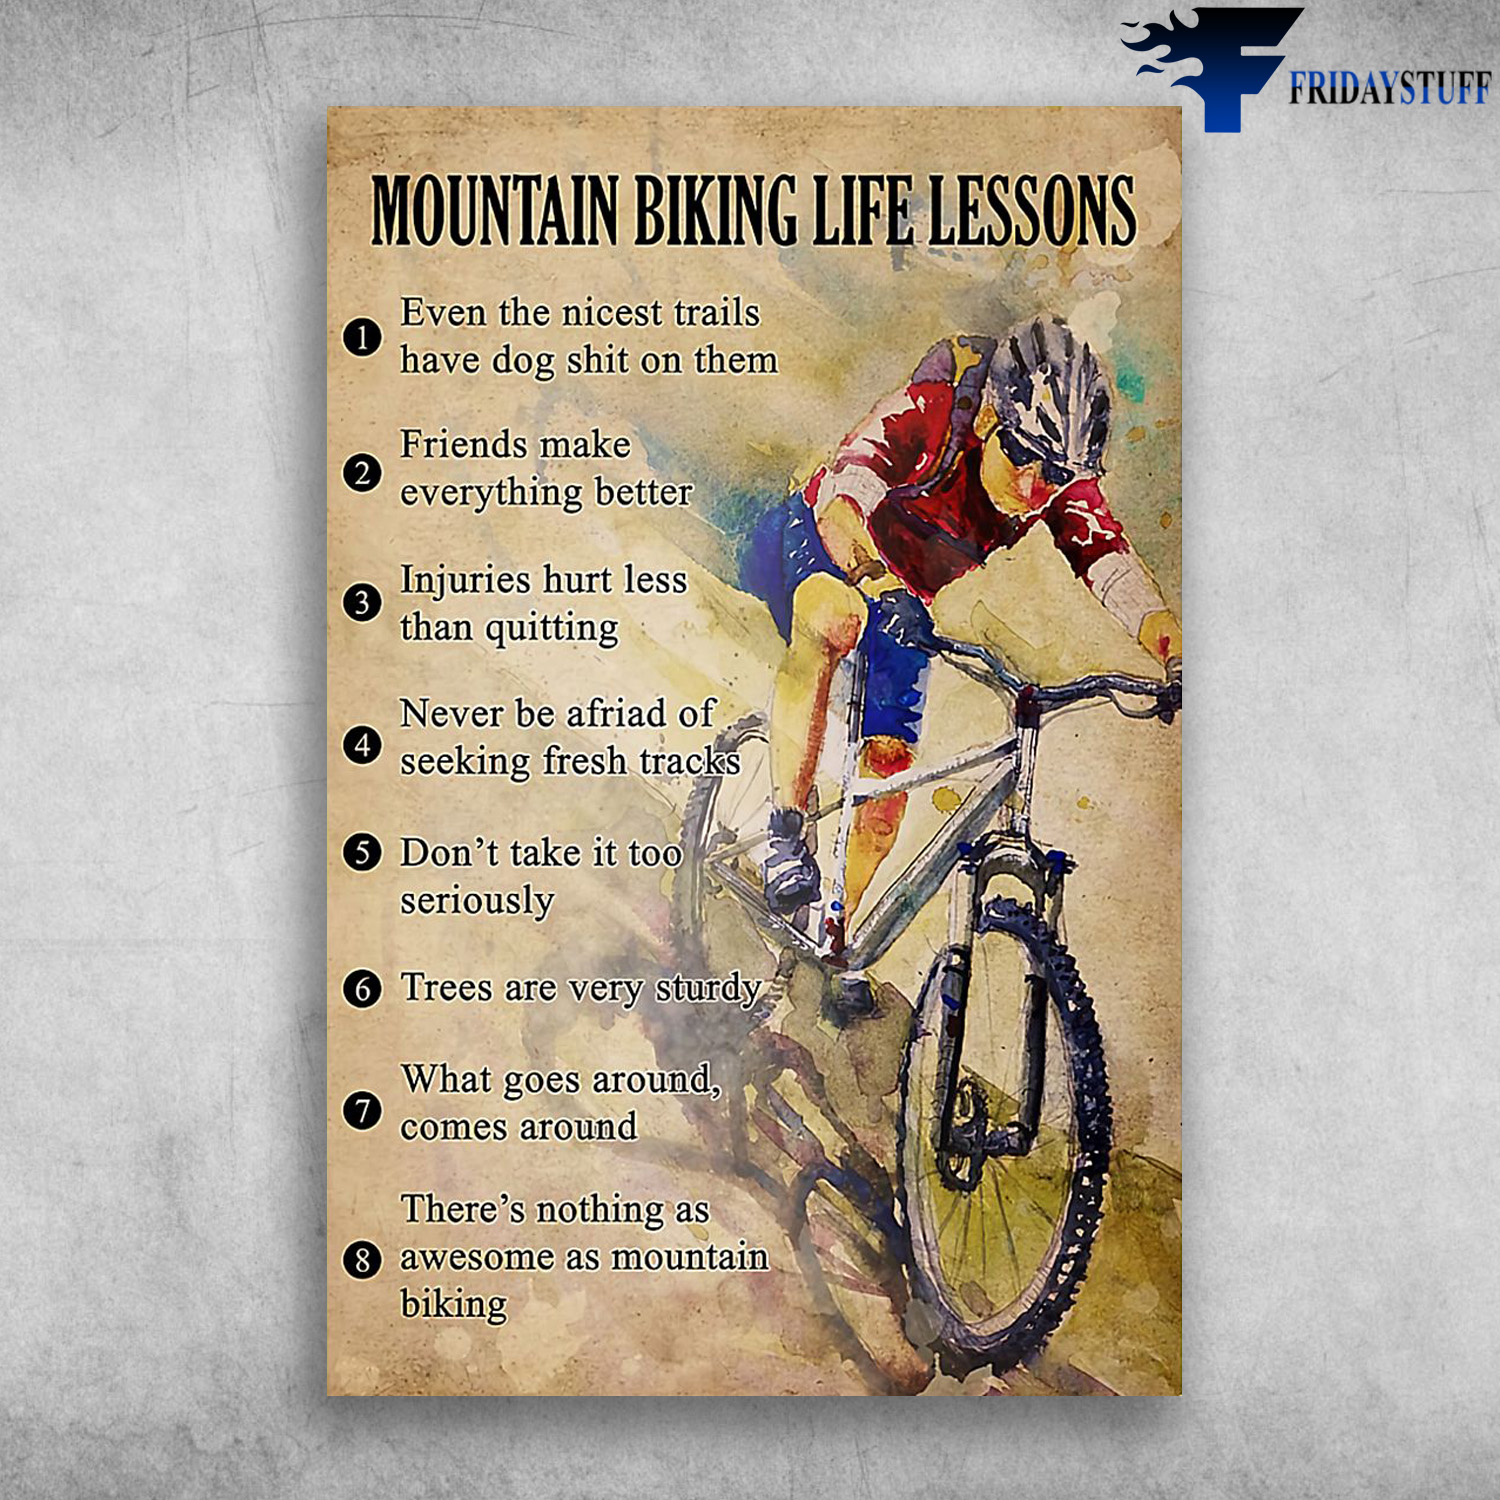 The Man Riding A Mountain Bike - Mountain Biking Life Lessons